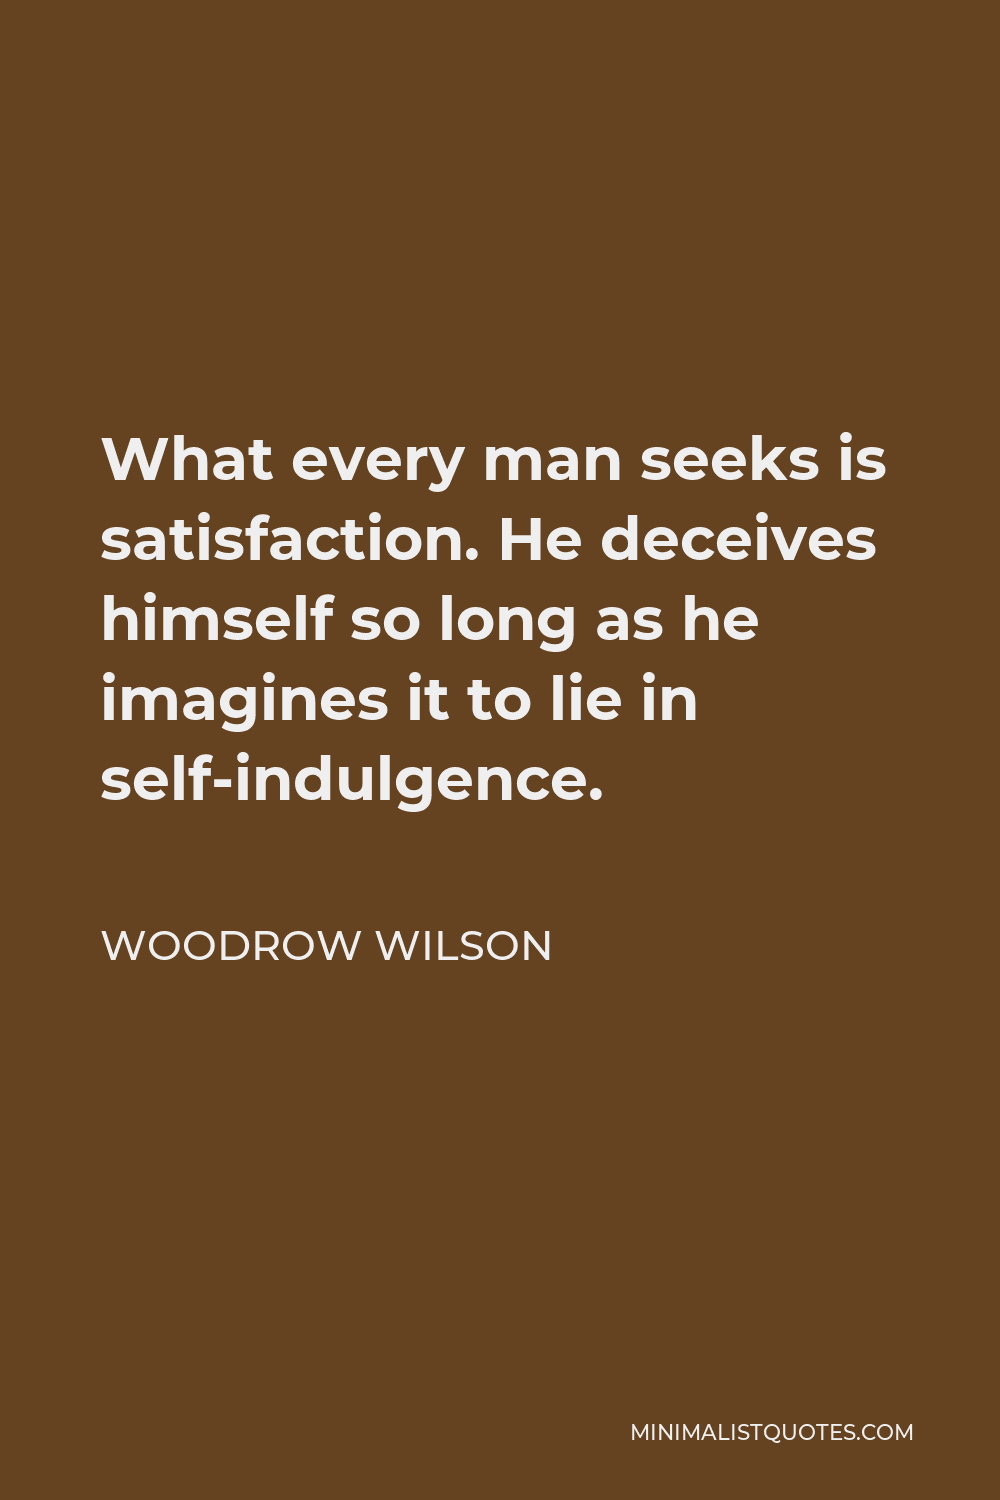 Woodrow Wilson Quote - What every man seeks is satisfaction. He deceives himself so long as he imagines it to lie in self-indulgence.